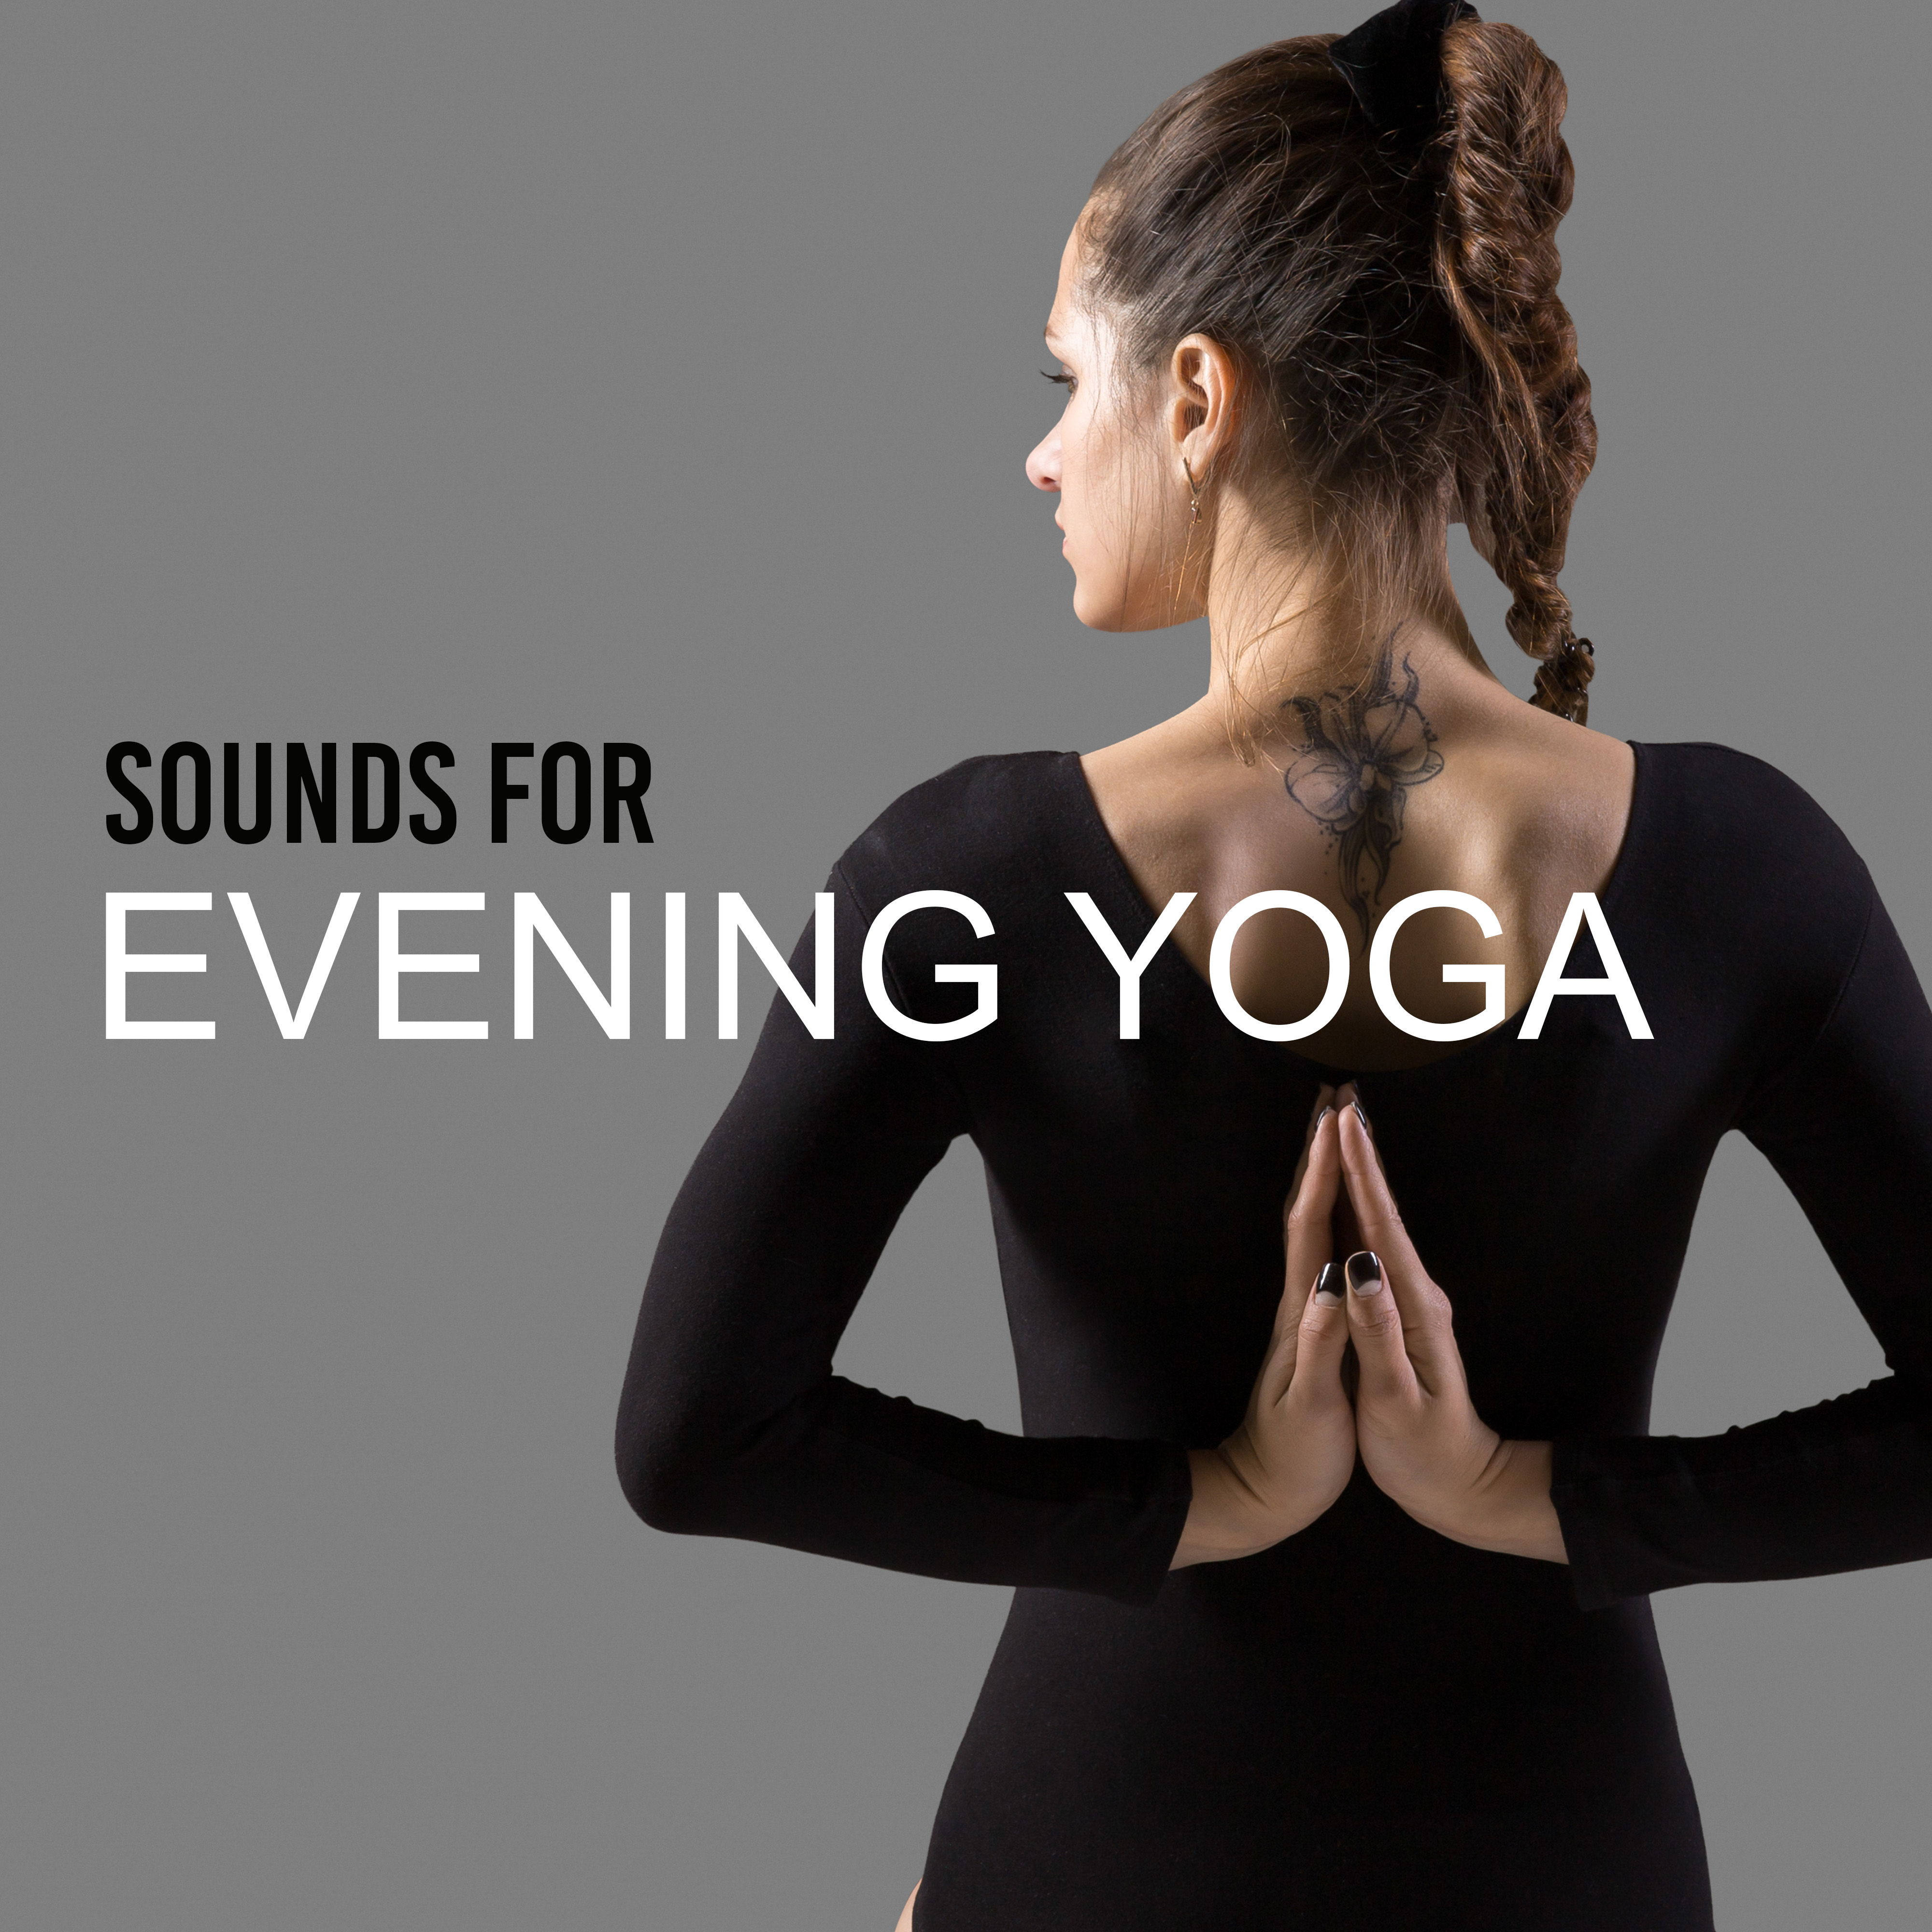 Sounds for Evening Yoga